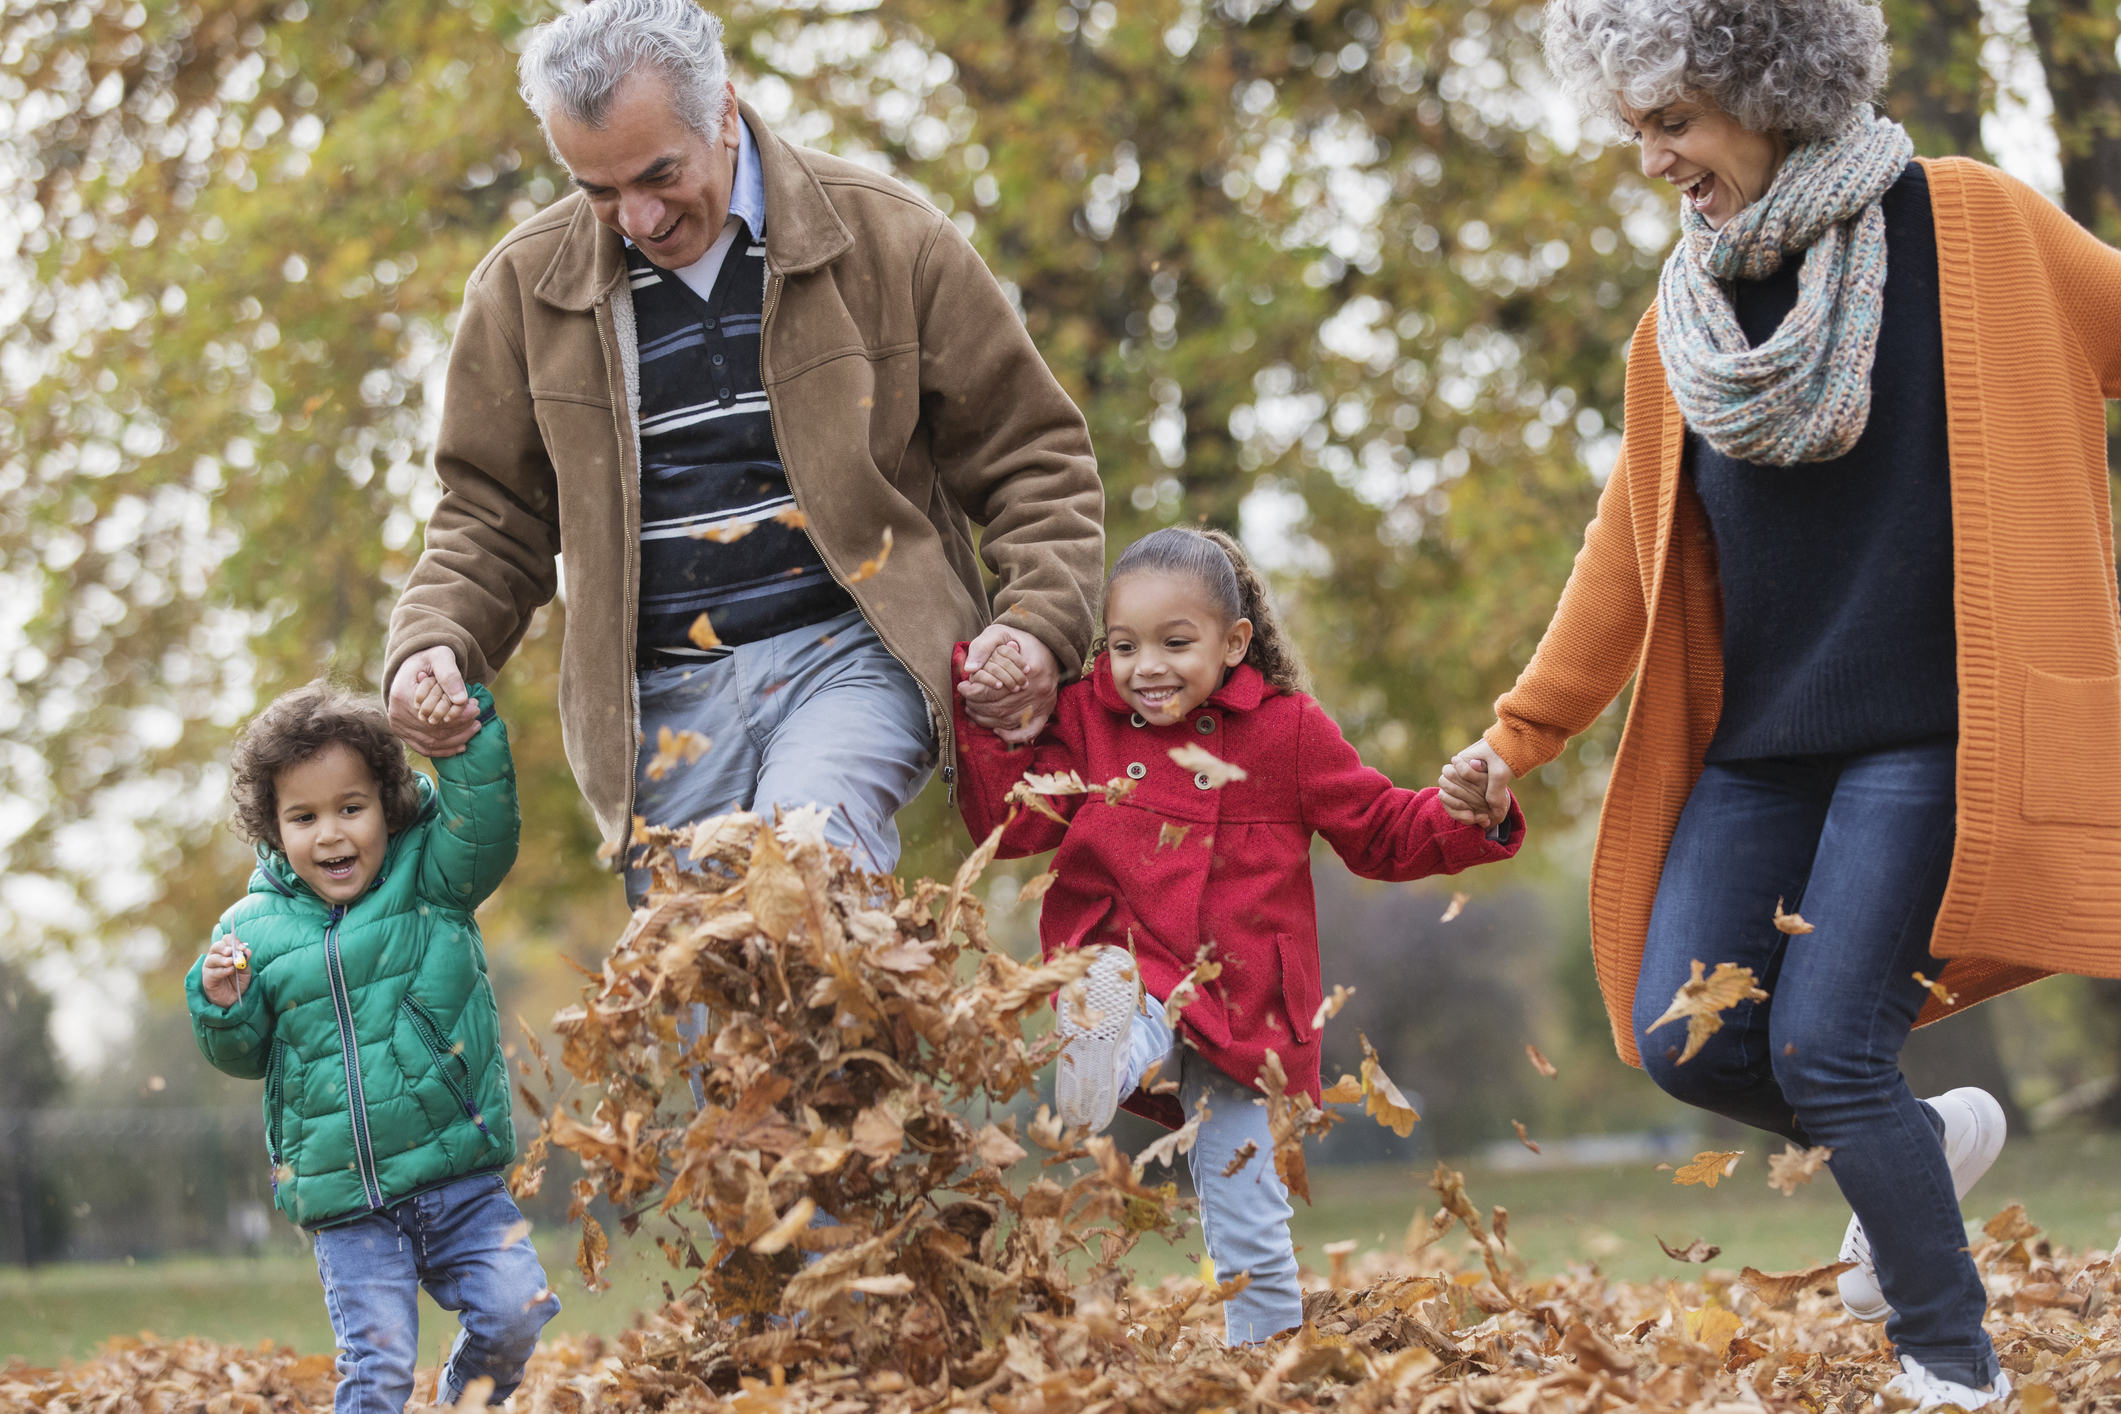 Grandparents and grandchildren kicking leaves